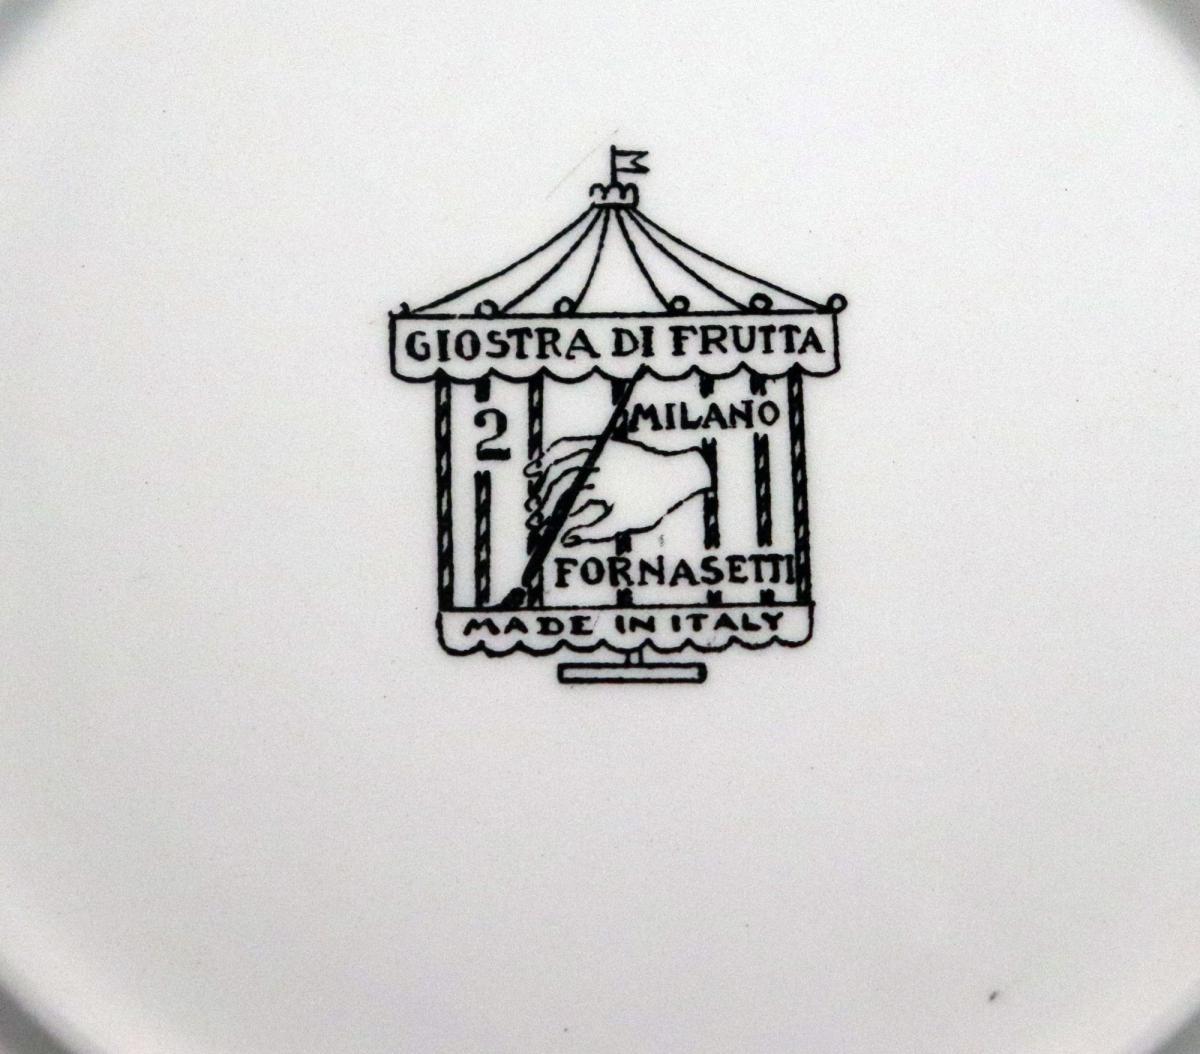 Piero Fornasetti Porcelain Plates, Giostra di Frutta, Set of Six, Numbered 1 through 6, 1955-65